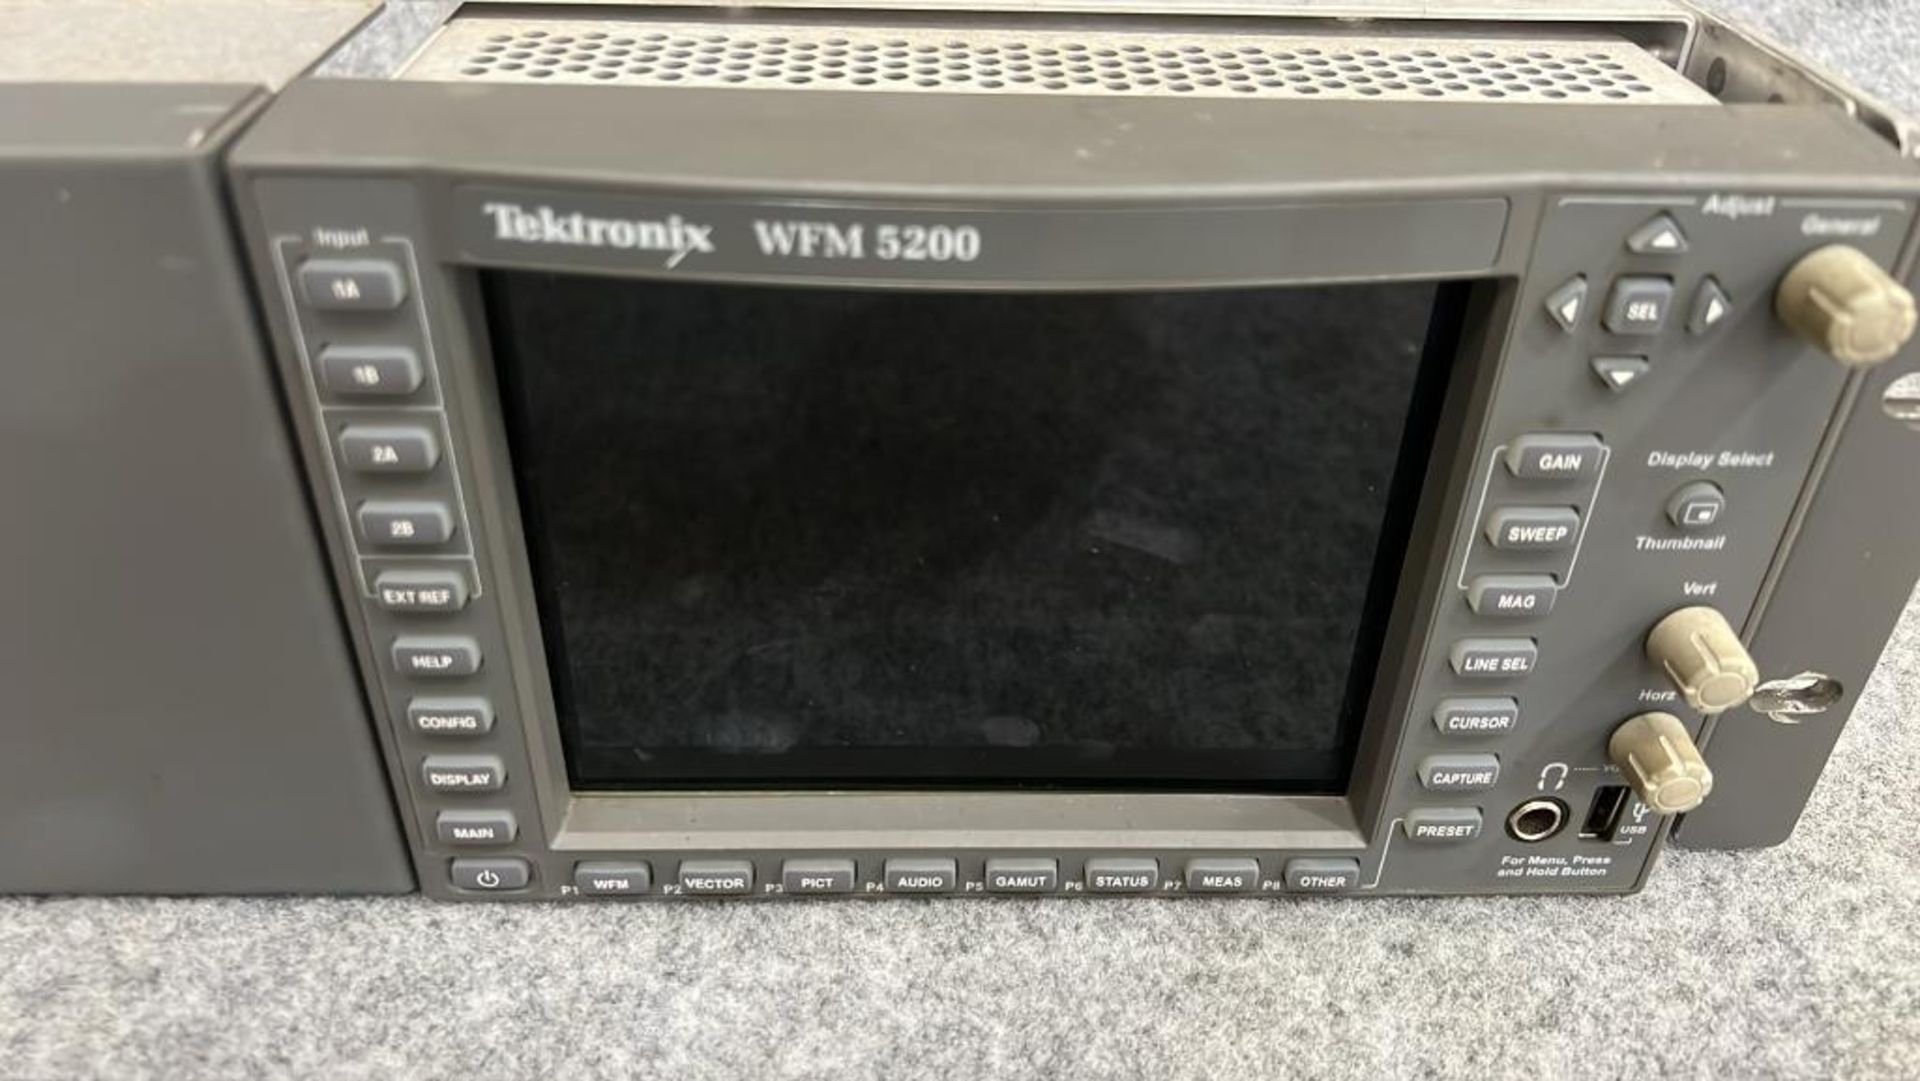 Tektronix WFM 5200, with Pu. Model: TektronixVFM 5200 - Image 4 of 7